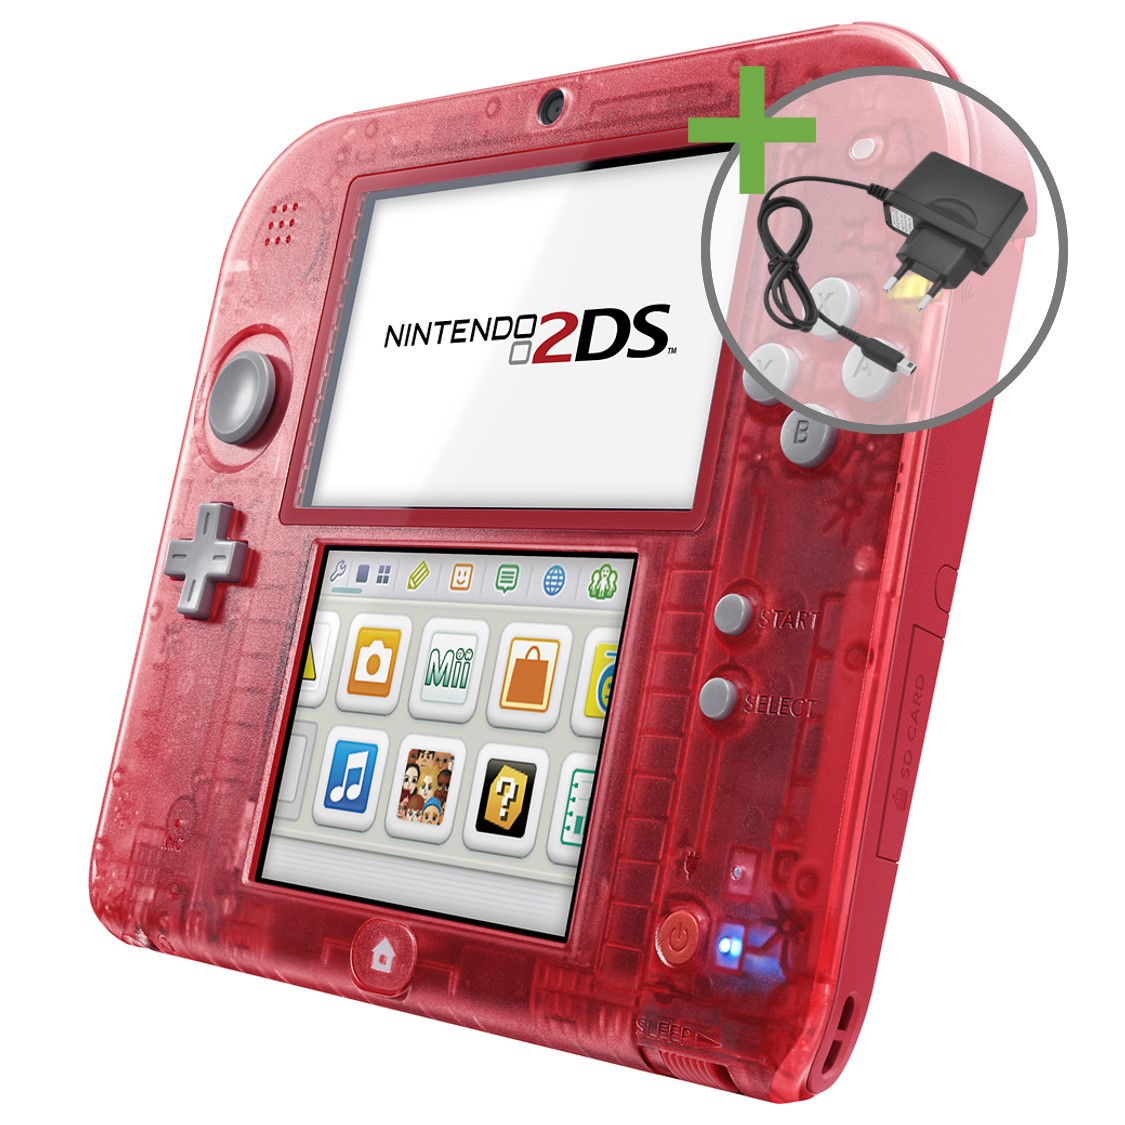 Nintendo 2DS - Crystal Red - Nintendo 3DS Hardware